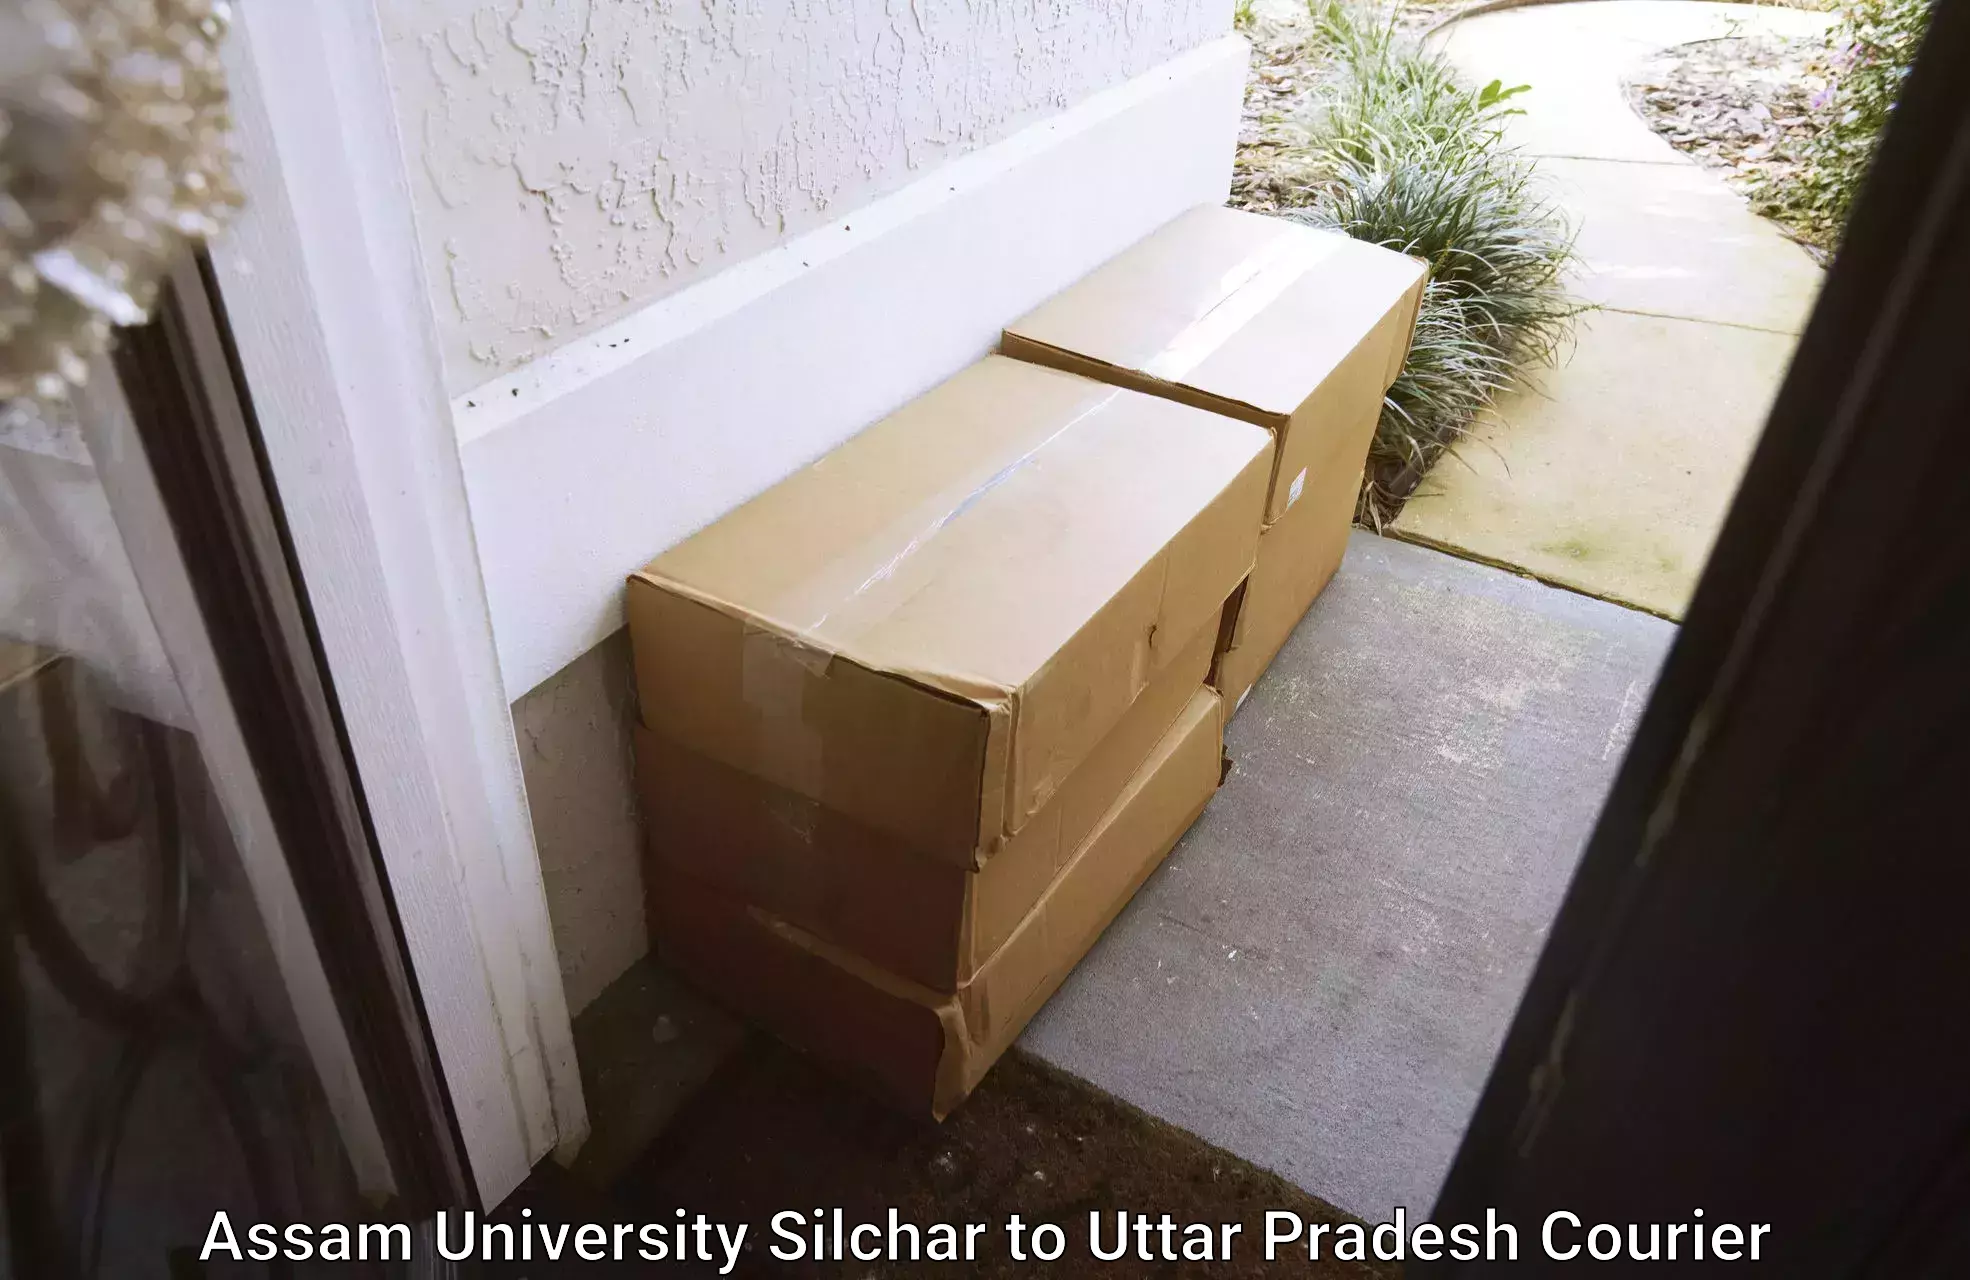 Reliable delivery network Assam University Silchar to Hamirpur Uttar Pradesh